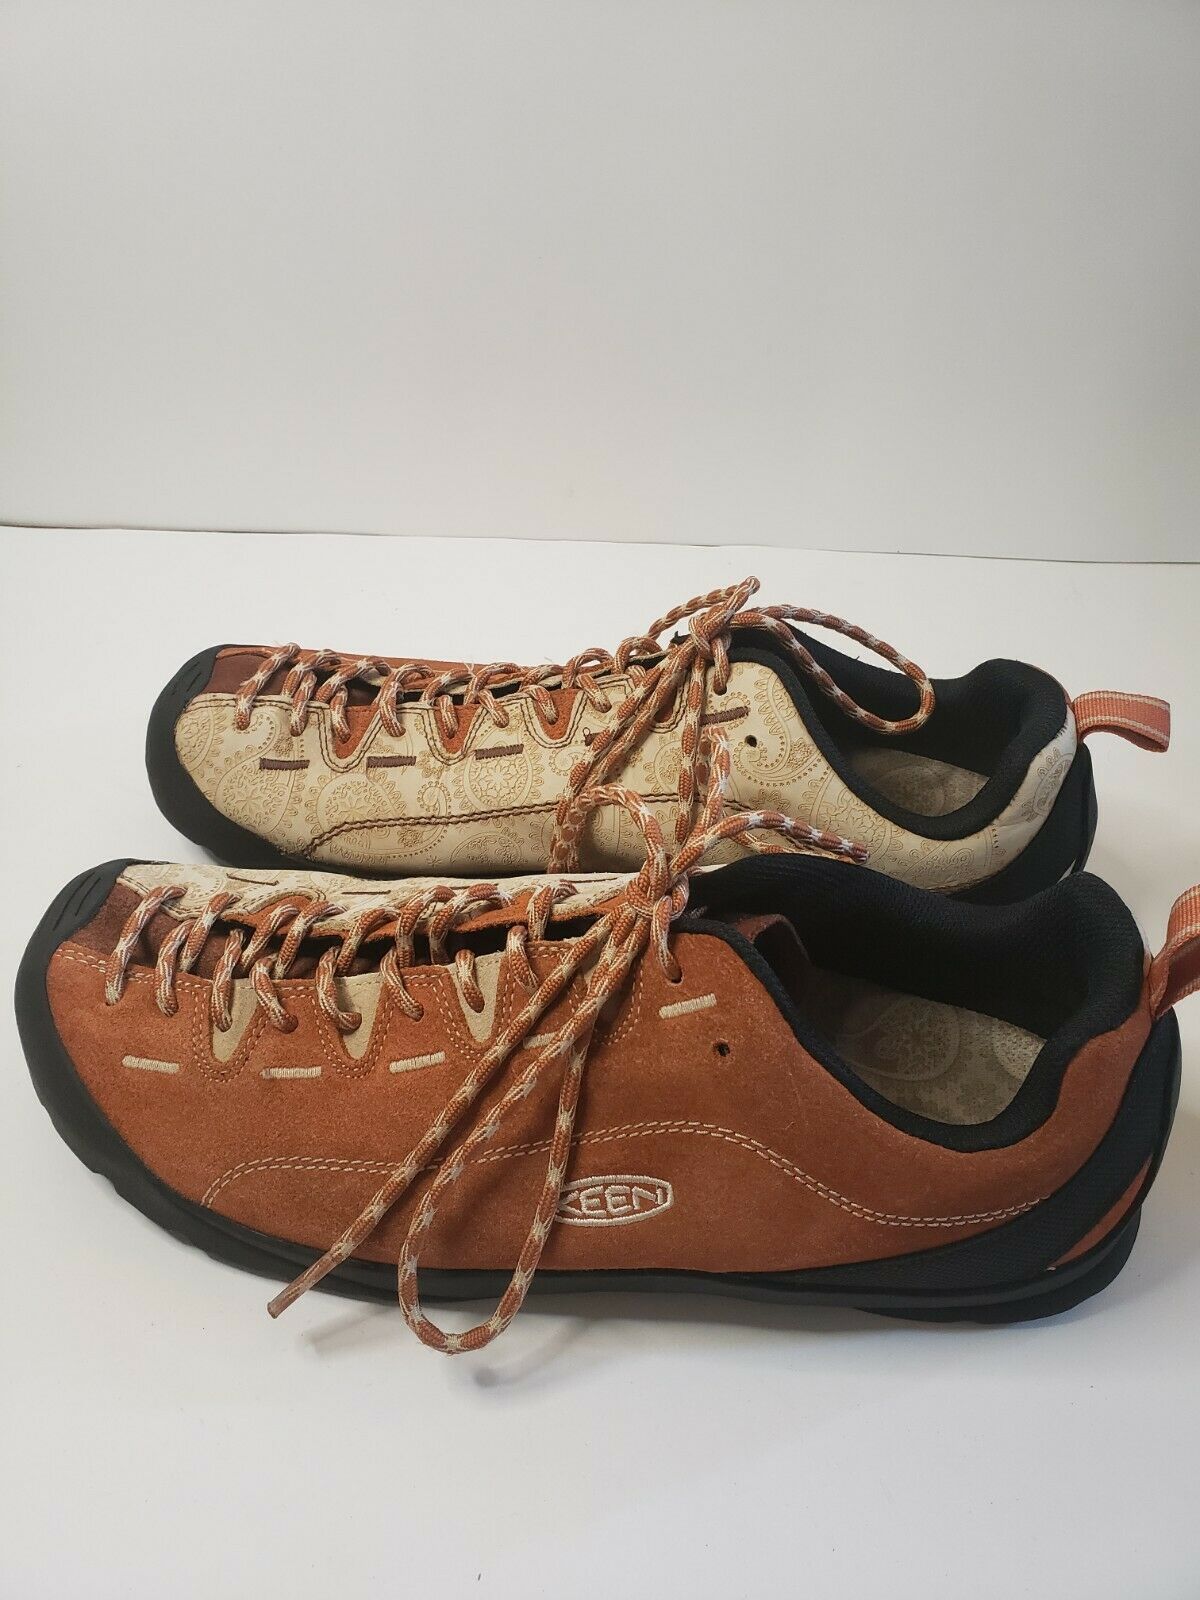 Keen Jasper Pollen Brown Paisley Hiking Shoes Men's Size US 12/EU 46